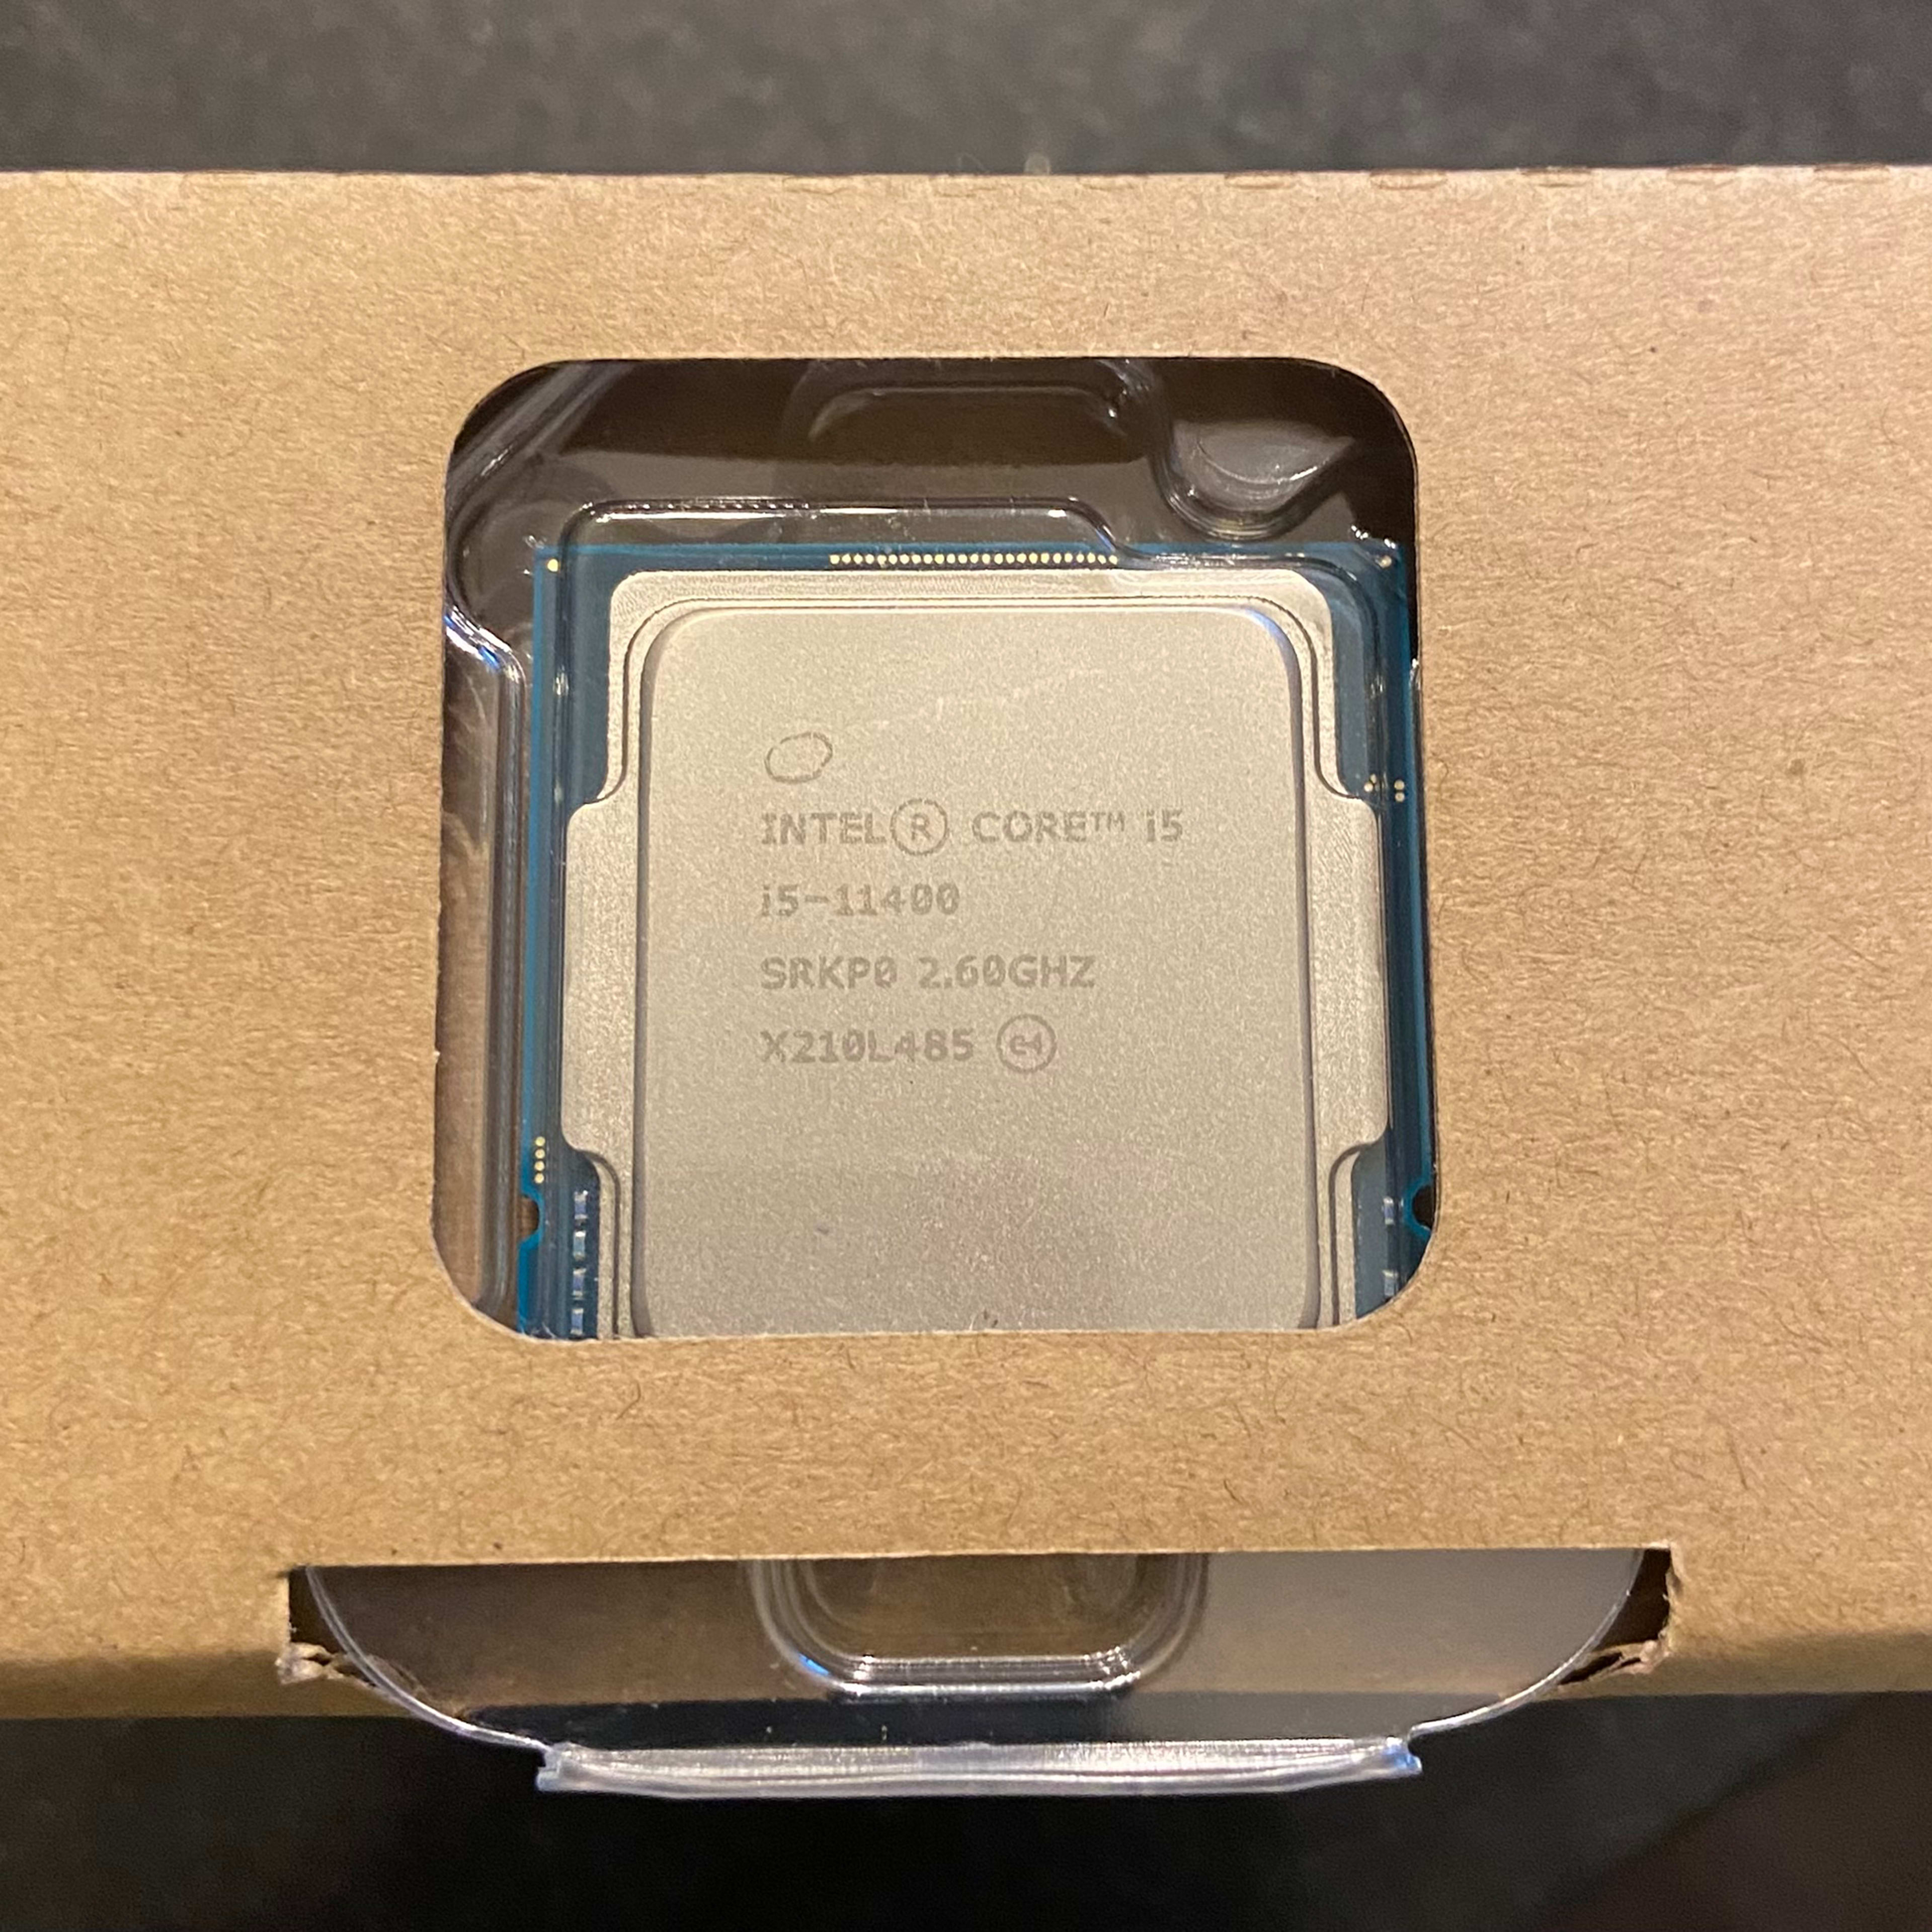 Intel Core i5-11400 –